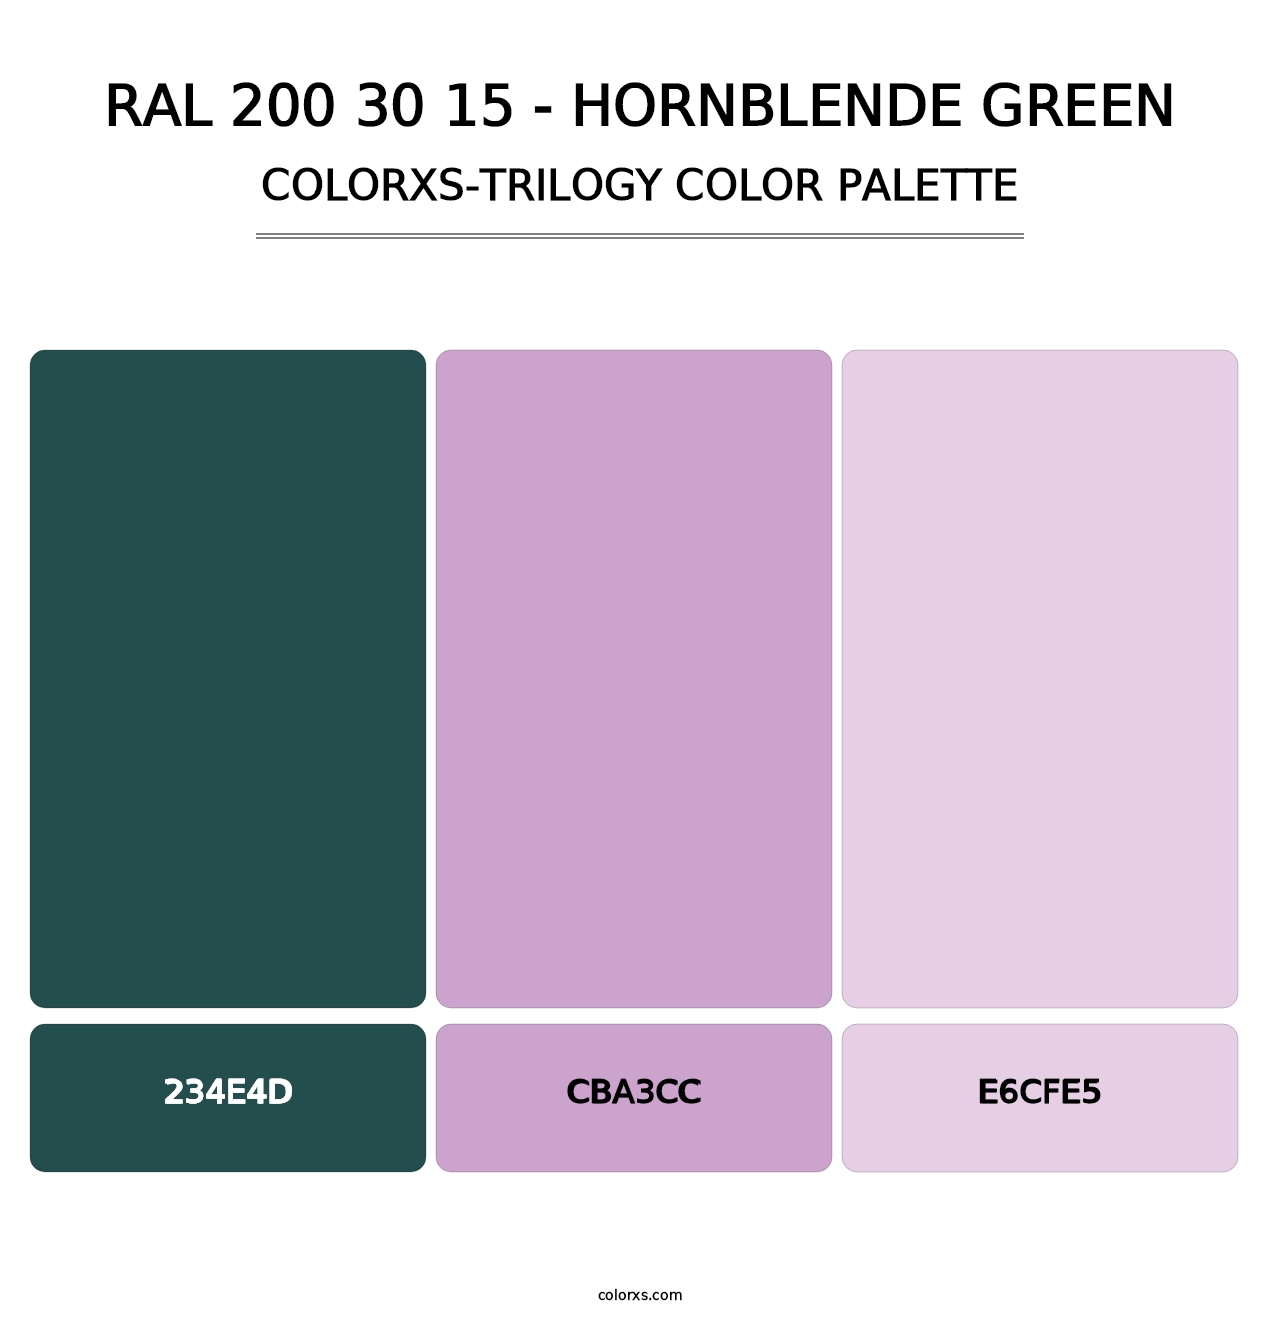 RAL 200 30 15 - Hornblende Green - Colorxs Trilogy Palette